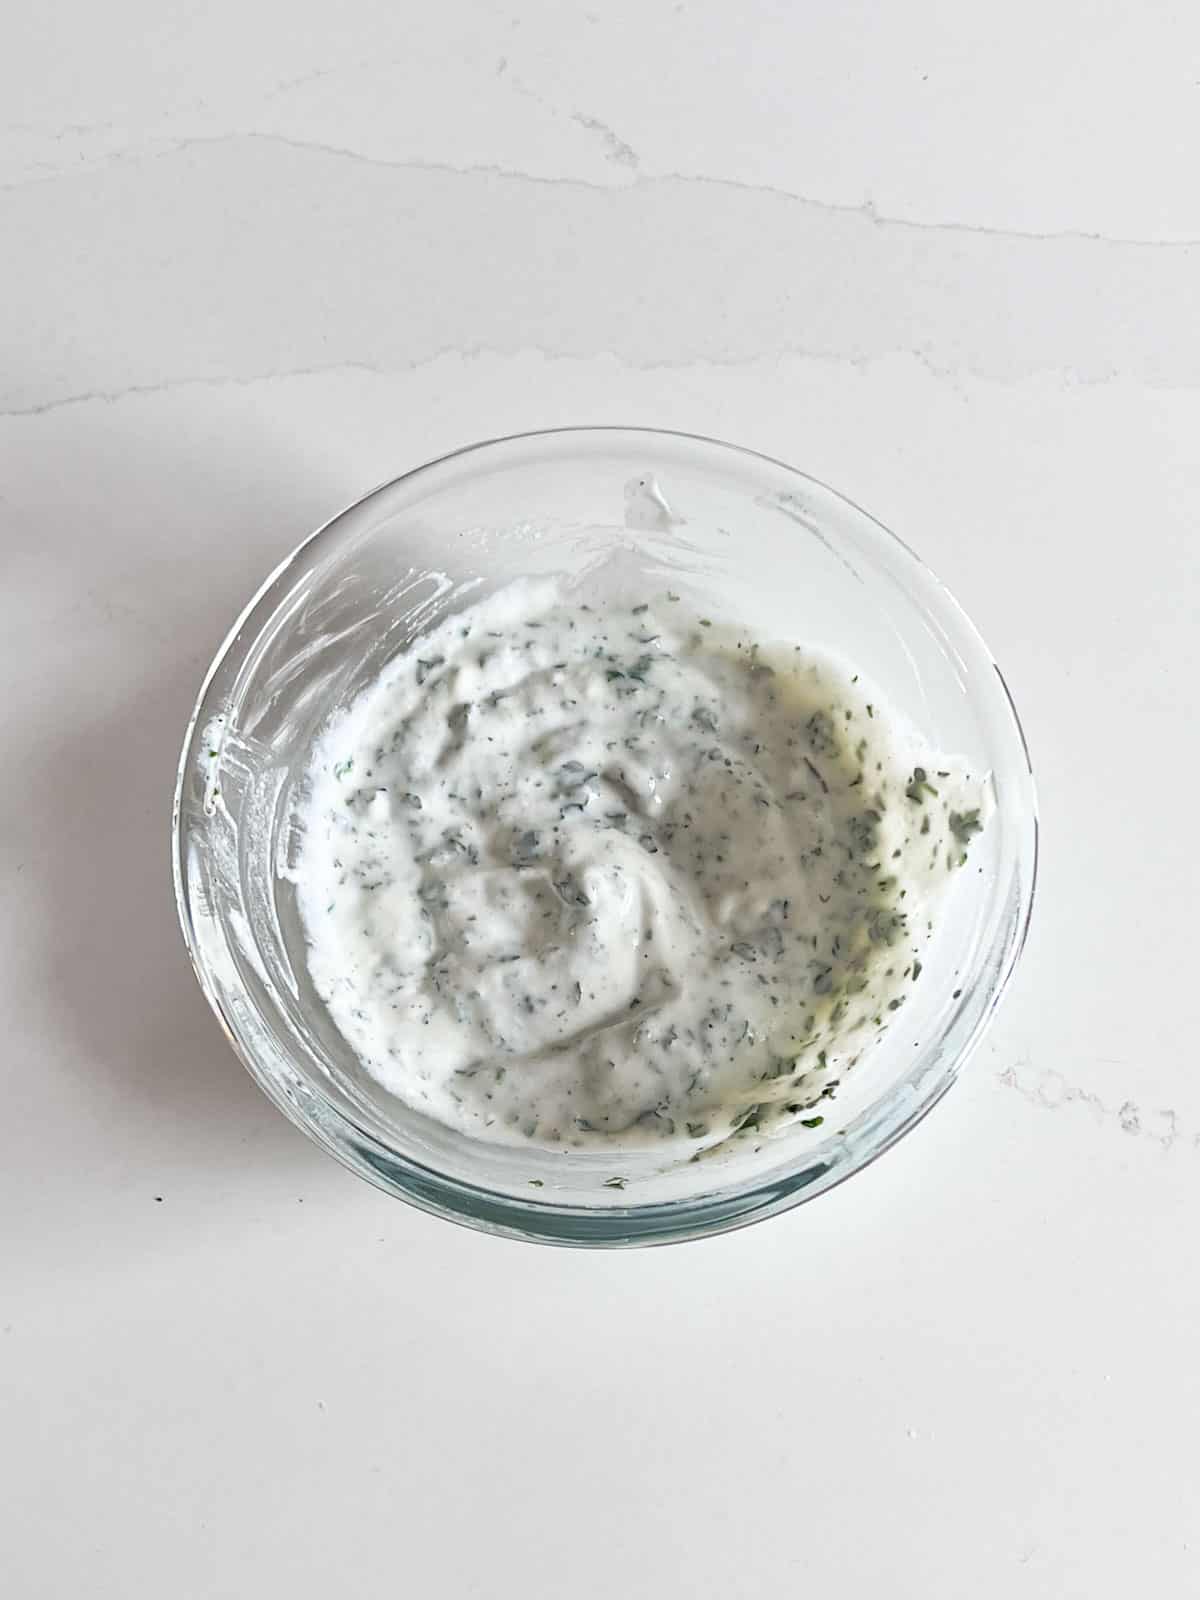 A glass bowl of herbed yogurt.